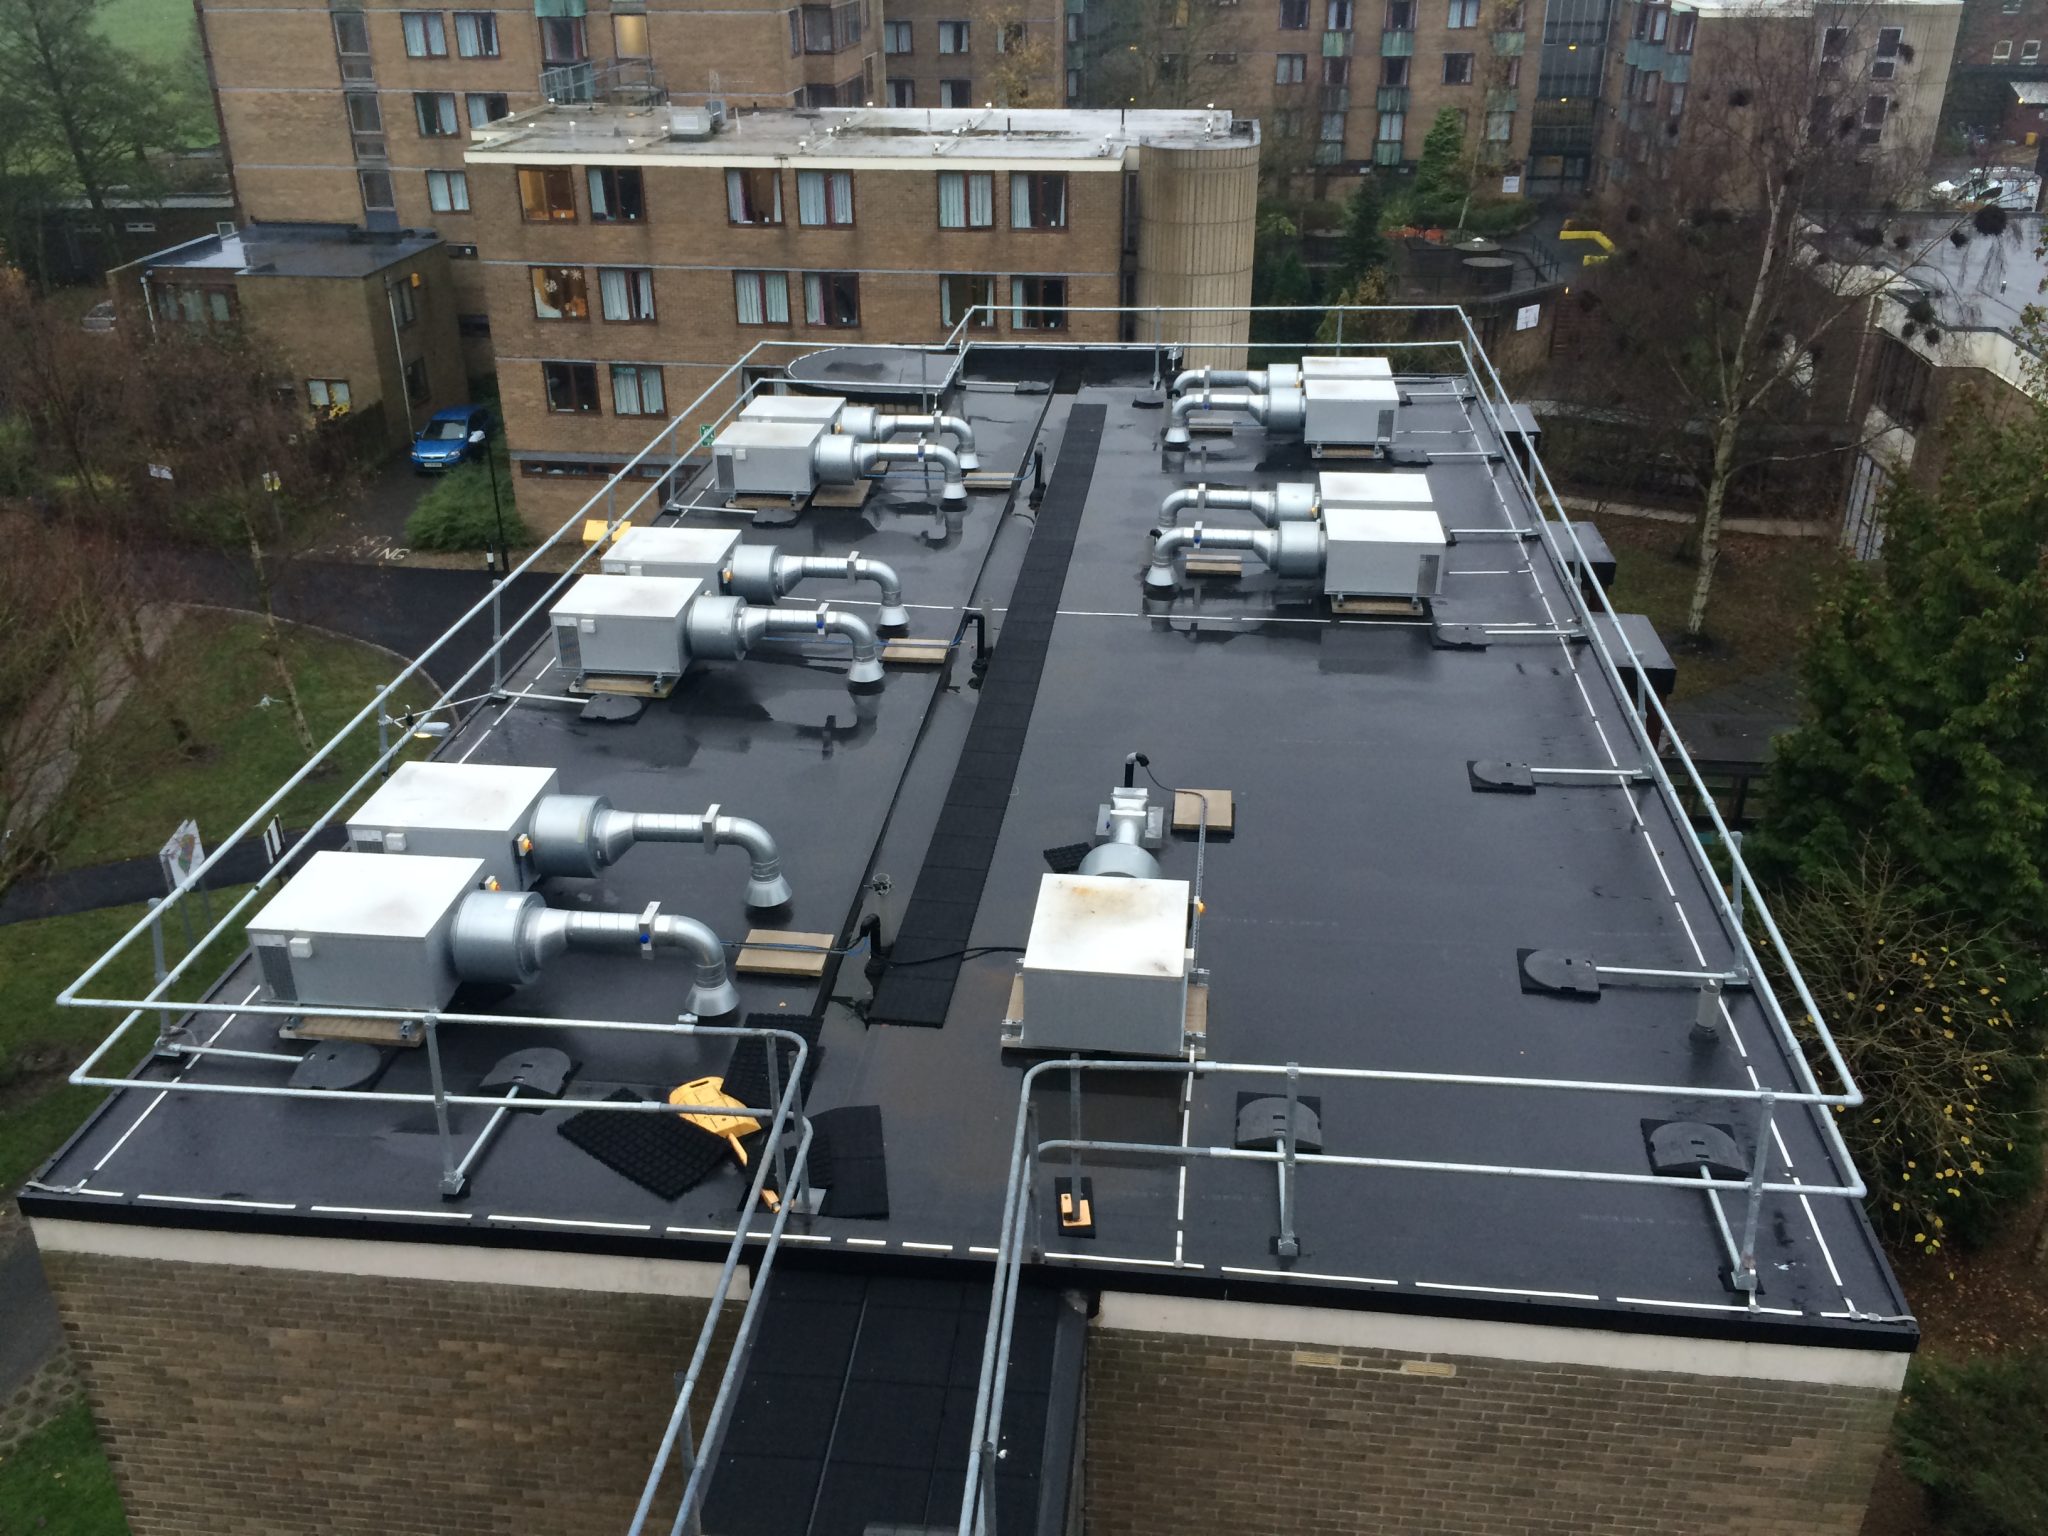 Newcastle University Roof